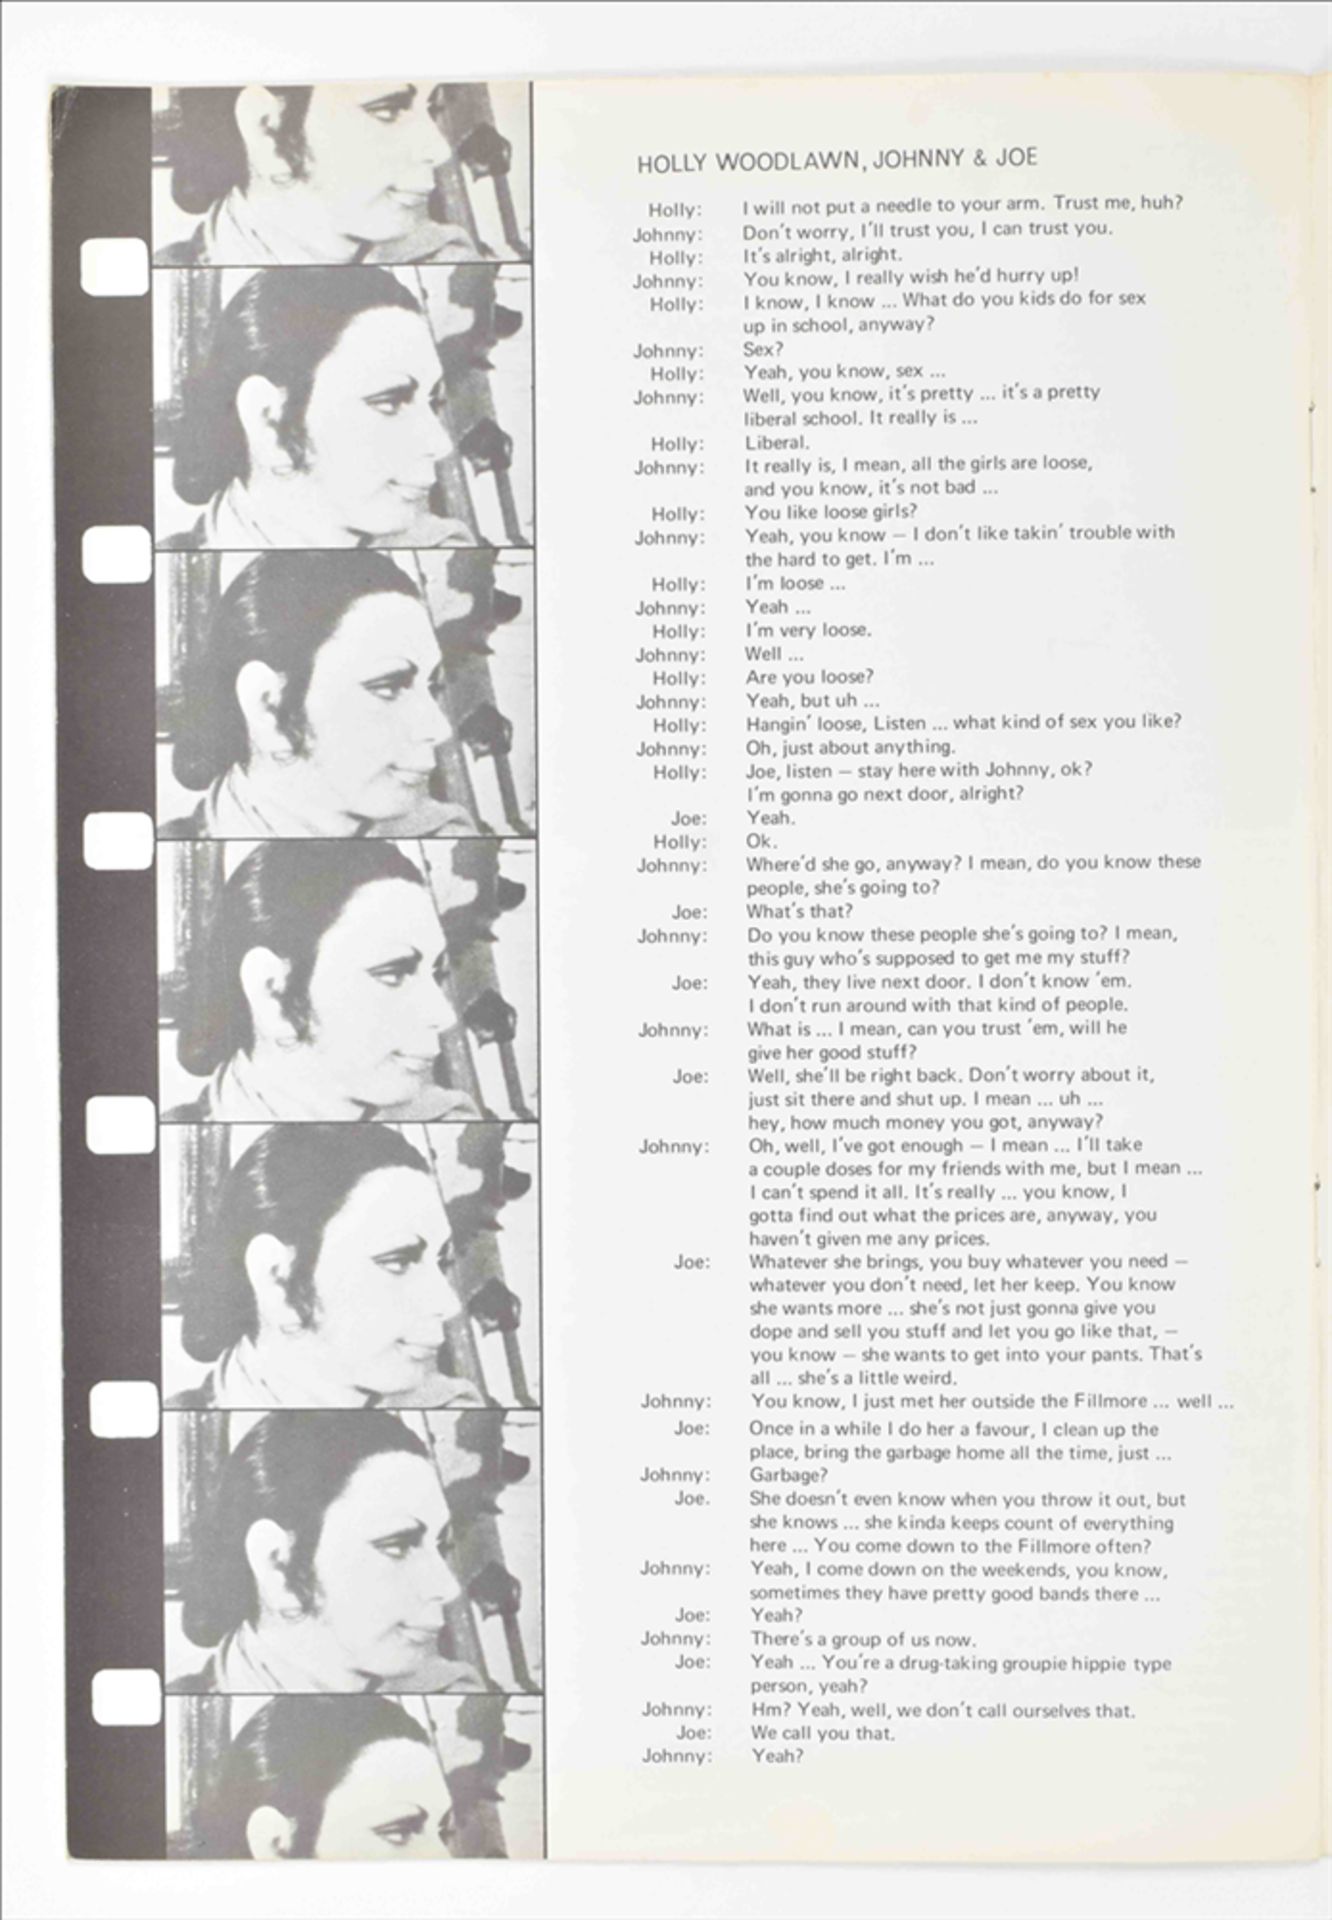 Andy Warhol presents Joe Dallesandro in Trash - Image 6 of 6